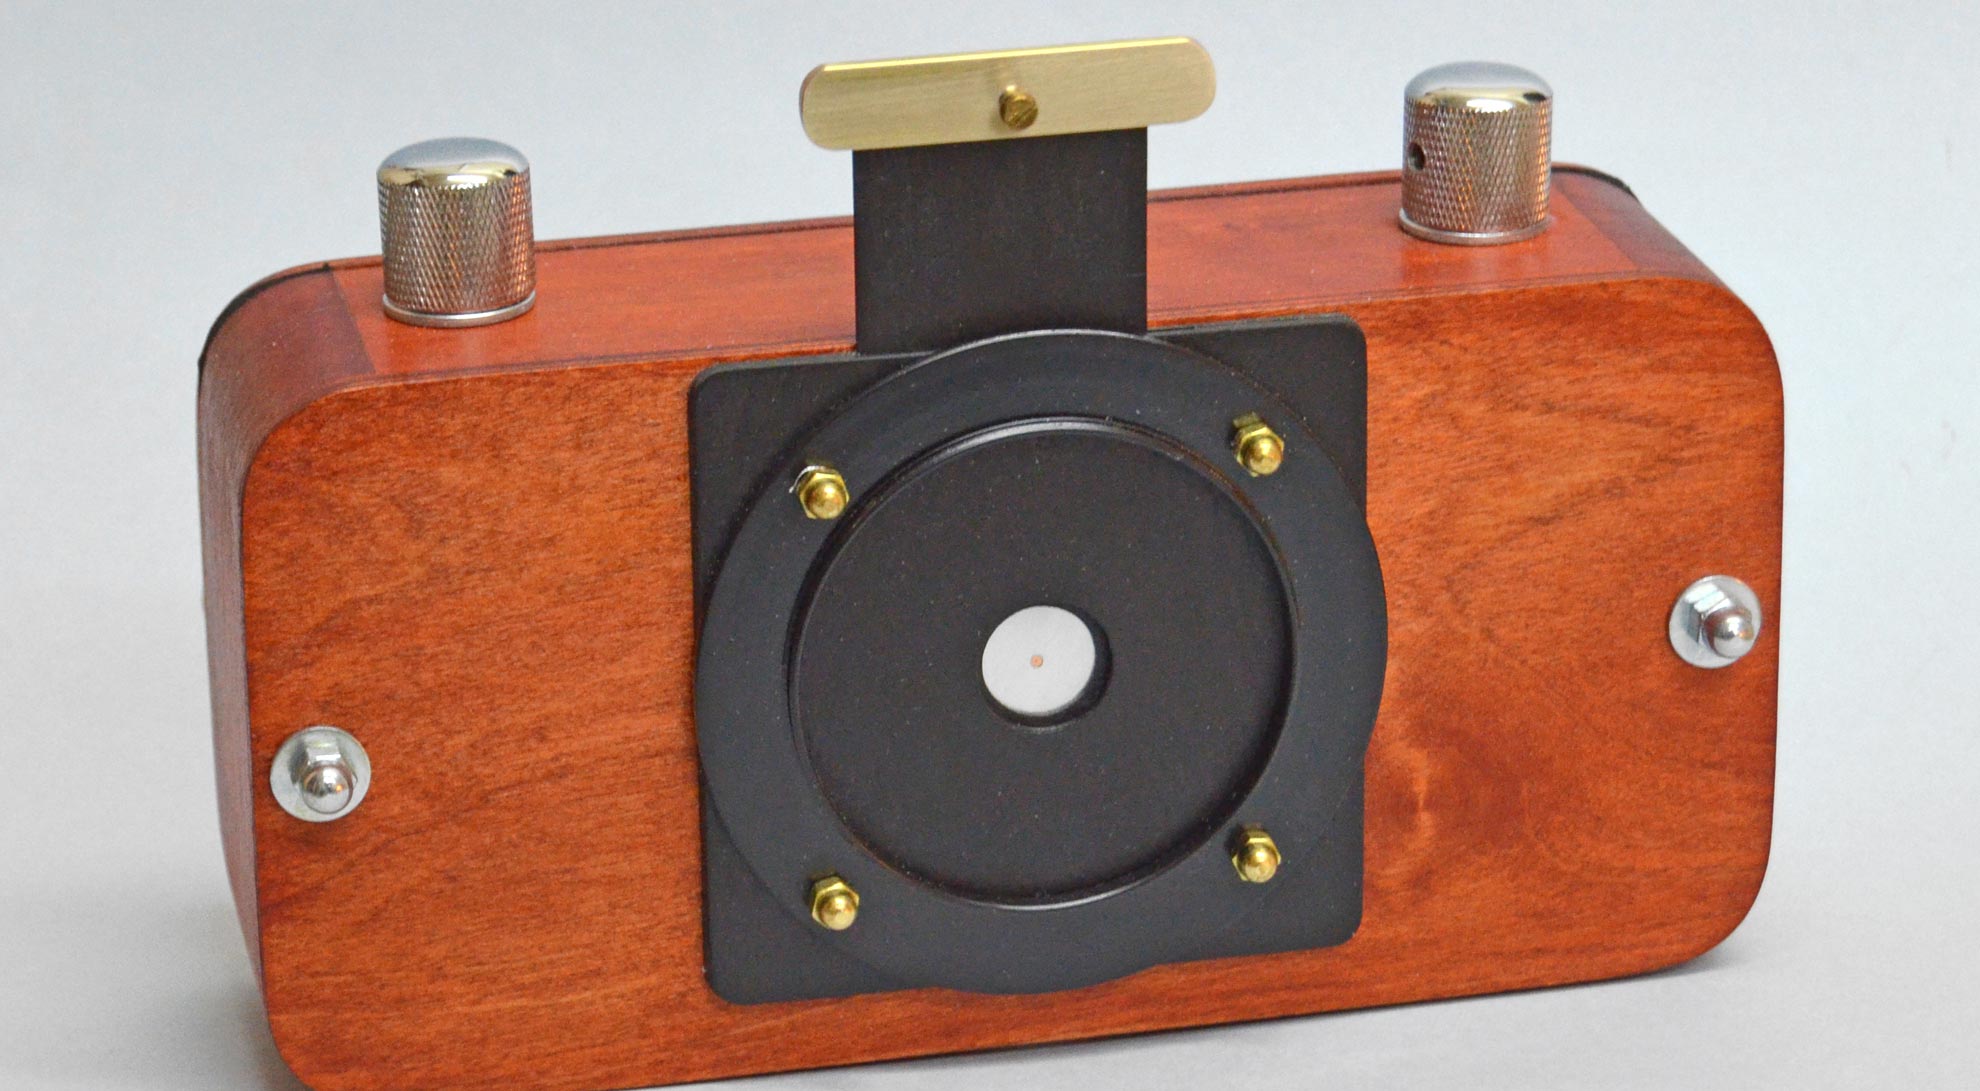 6x9 cm wide angle pinhole camera